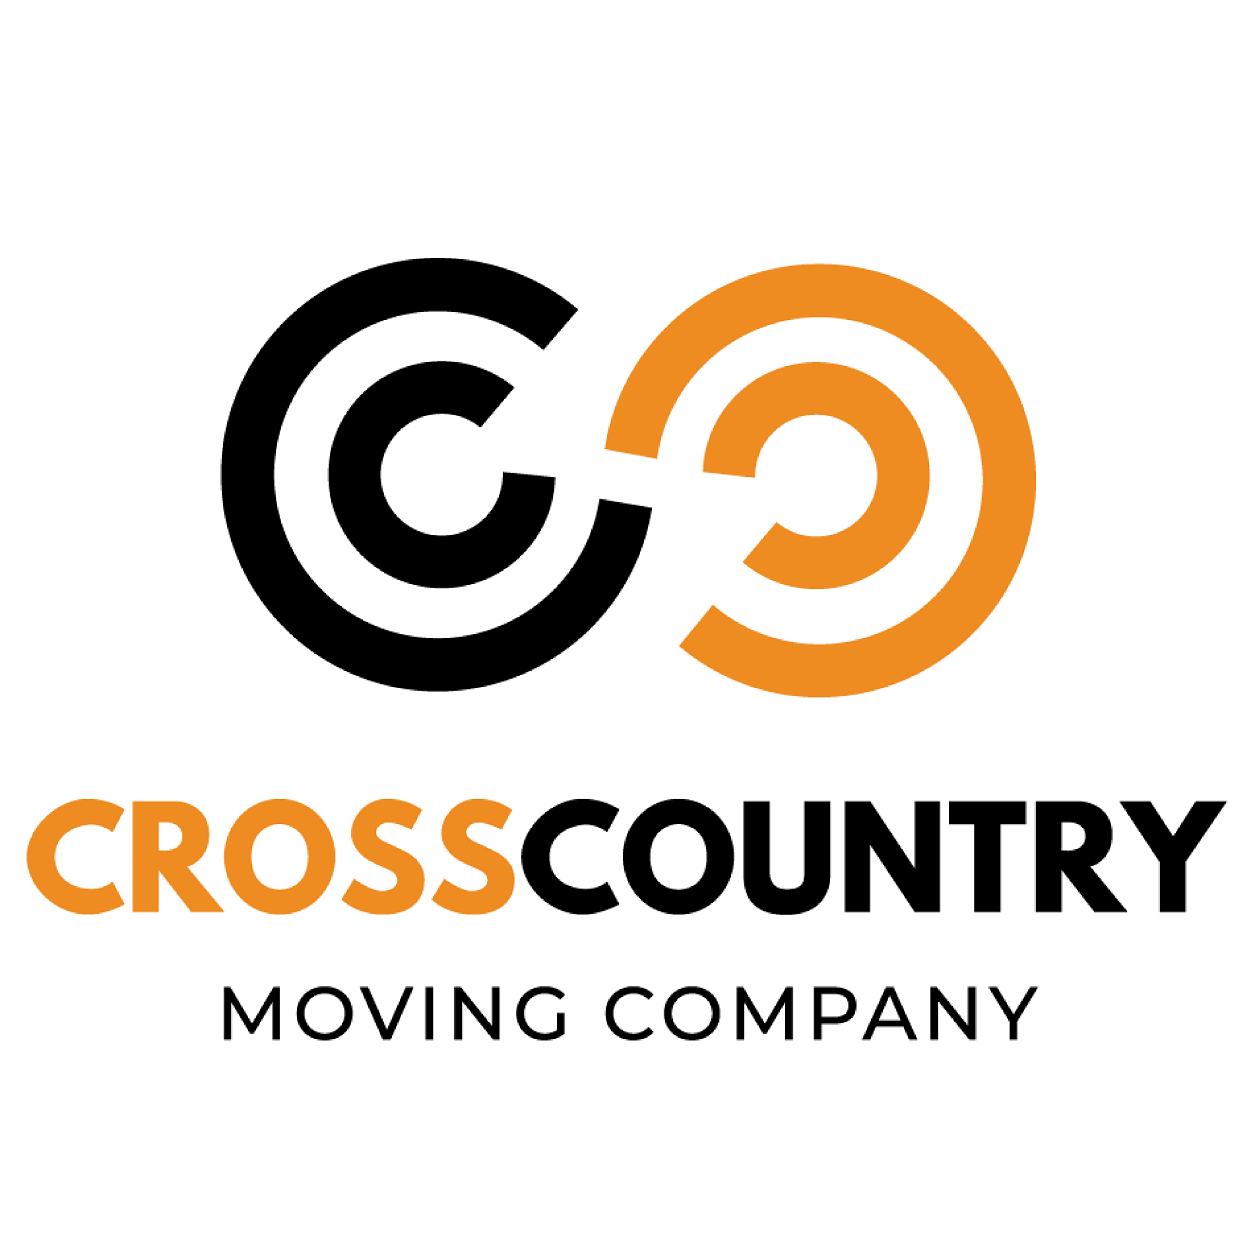 Cross Country Moving Company Logo